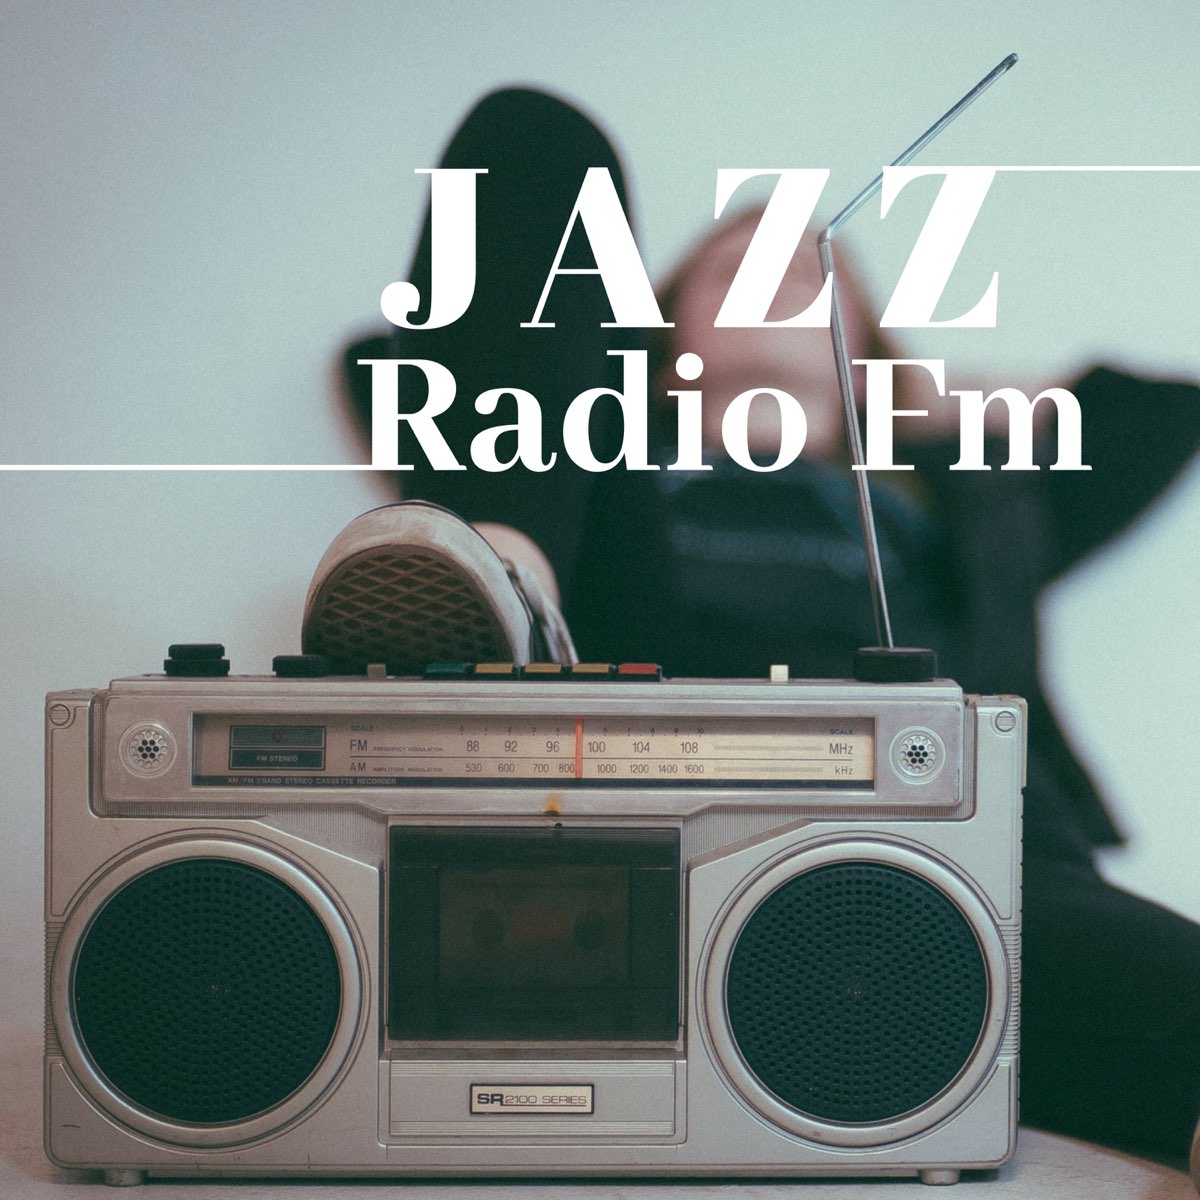 Jazz Radio Fm - The Very Best in Smooth Jazz Music, Nu Jazz, Afro-Cuban Jazz,  Ethno Jazz, Jazz Fusion by Relaxing Instrumental Jazz Academy on Apple Music